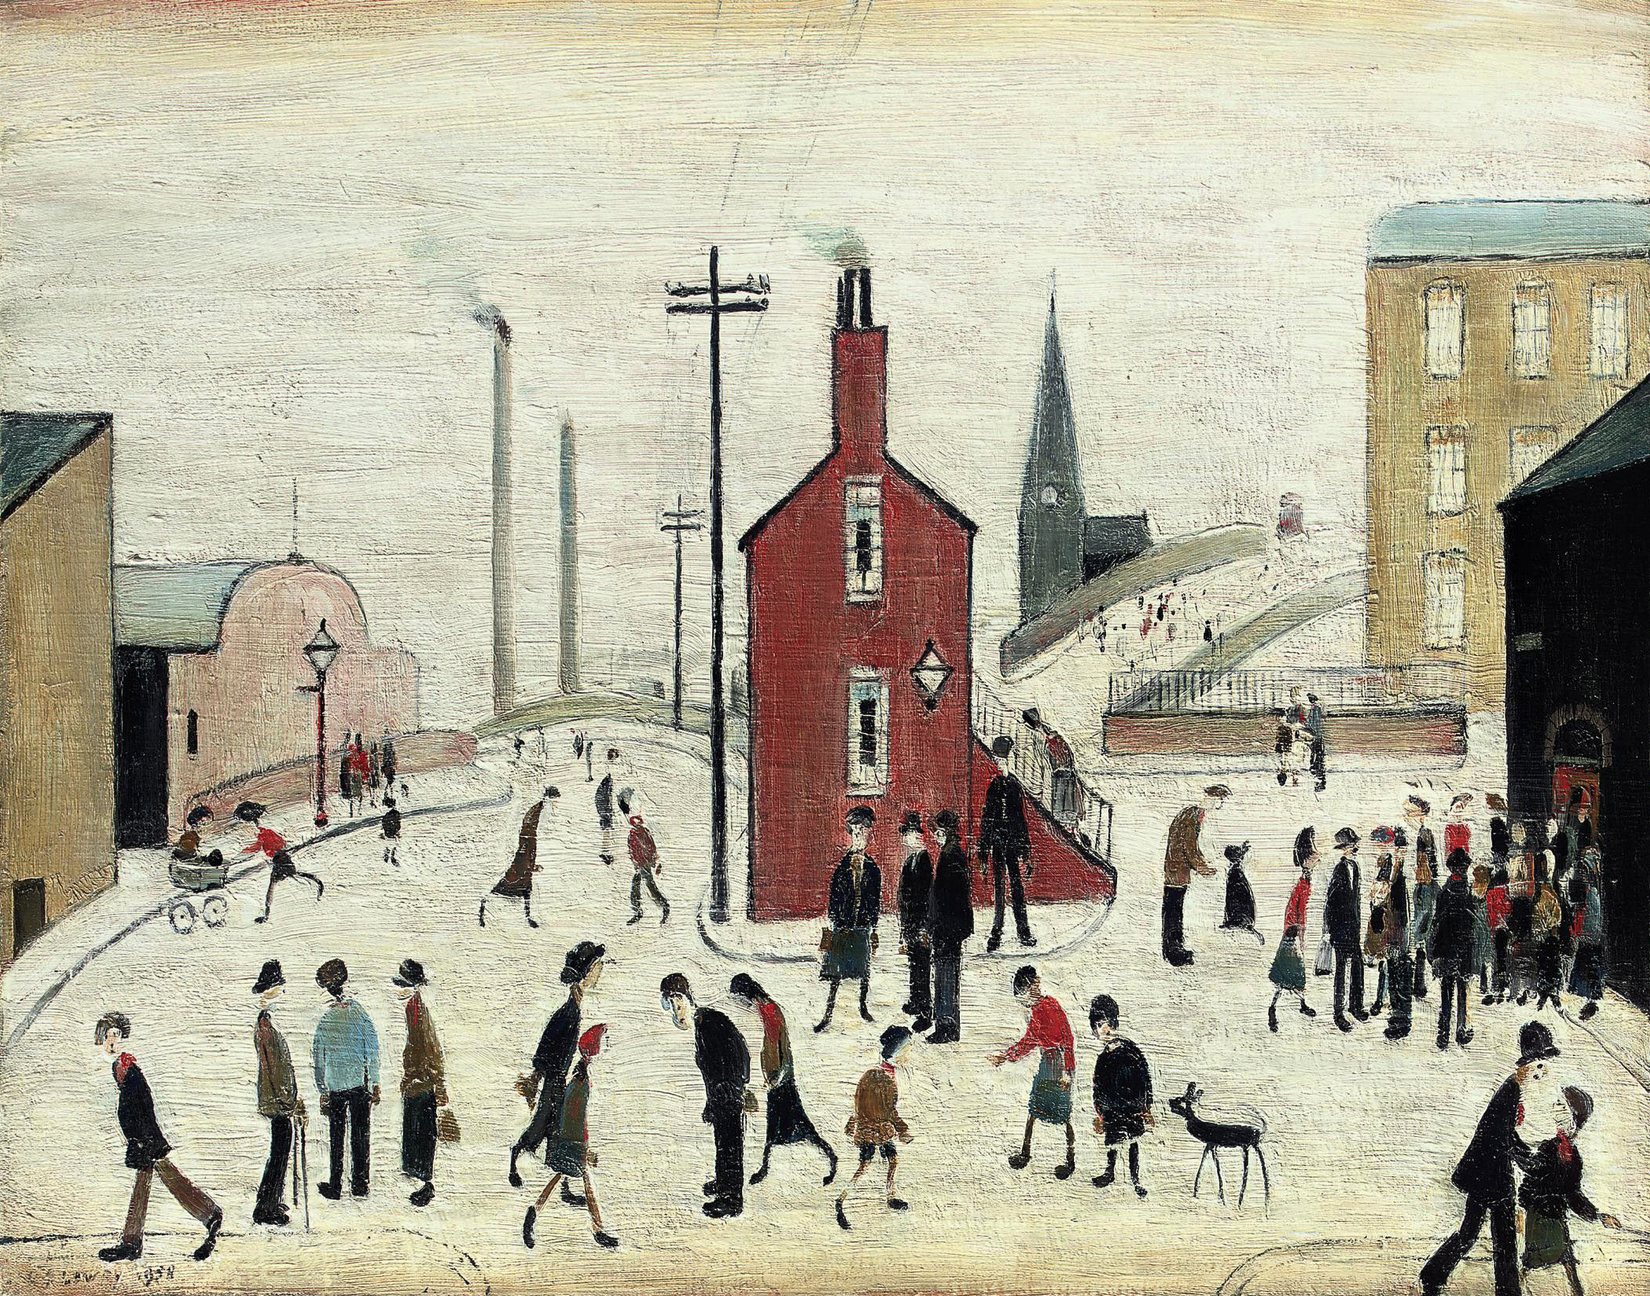 Street scene (1958) by Laurence Stephen Lowry (1887 - 1976), English artist.